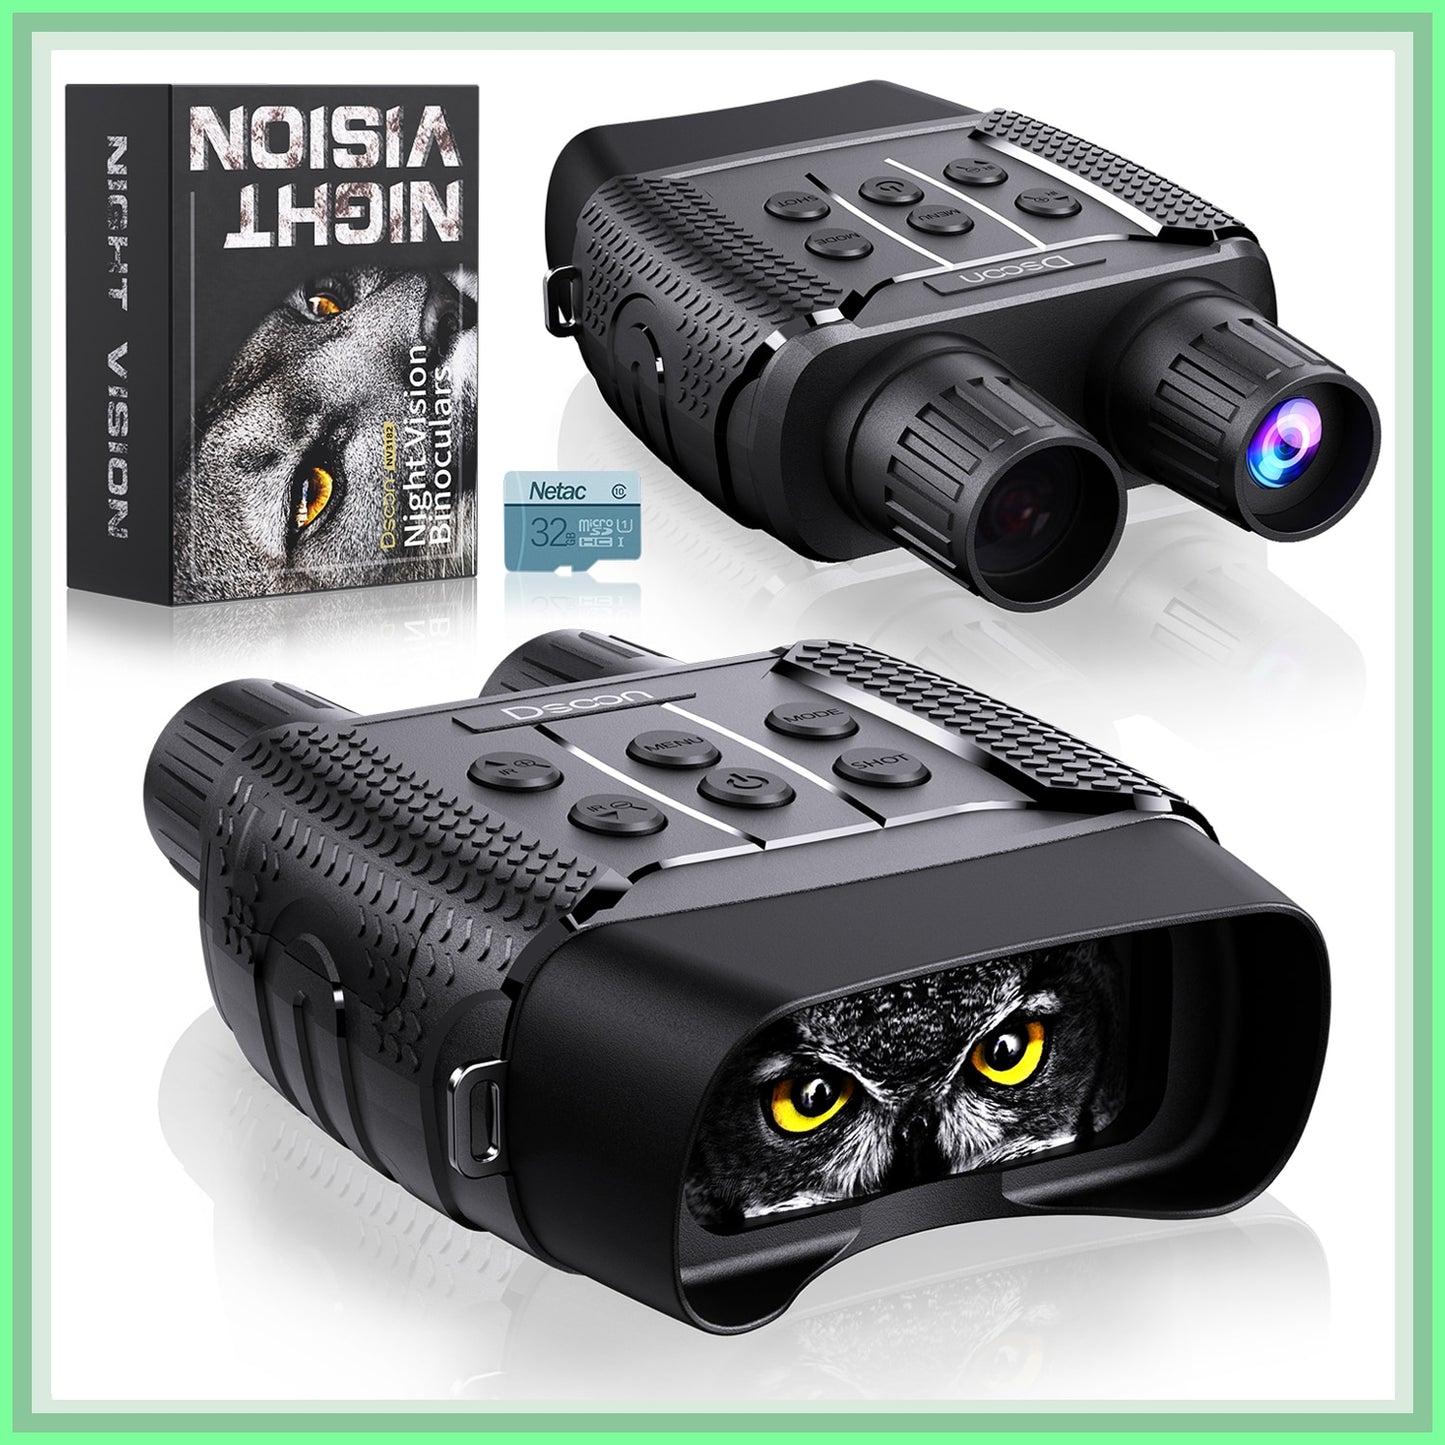 Infrared/Night Vision Video Binoculars | Waterproof | 330 Yards Max | +32GB Storage